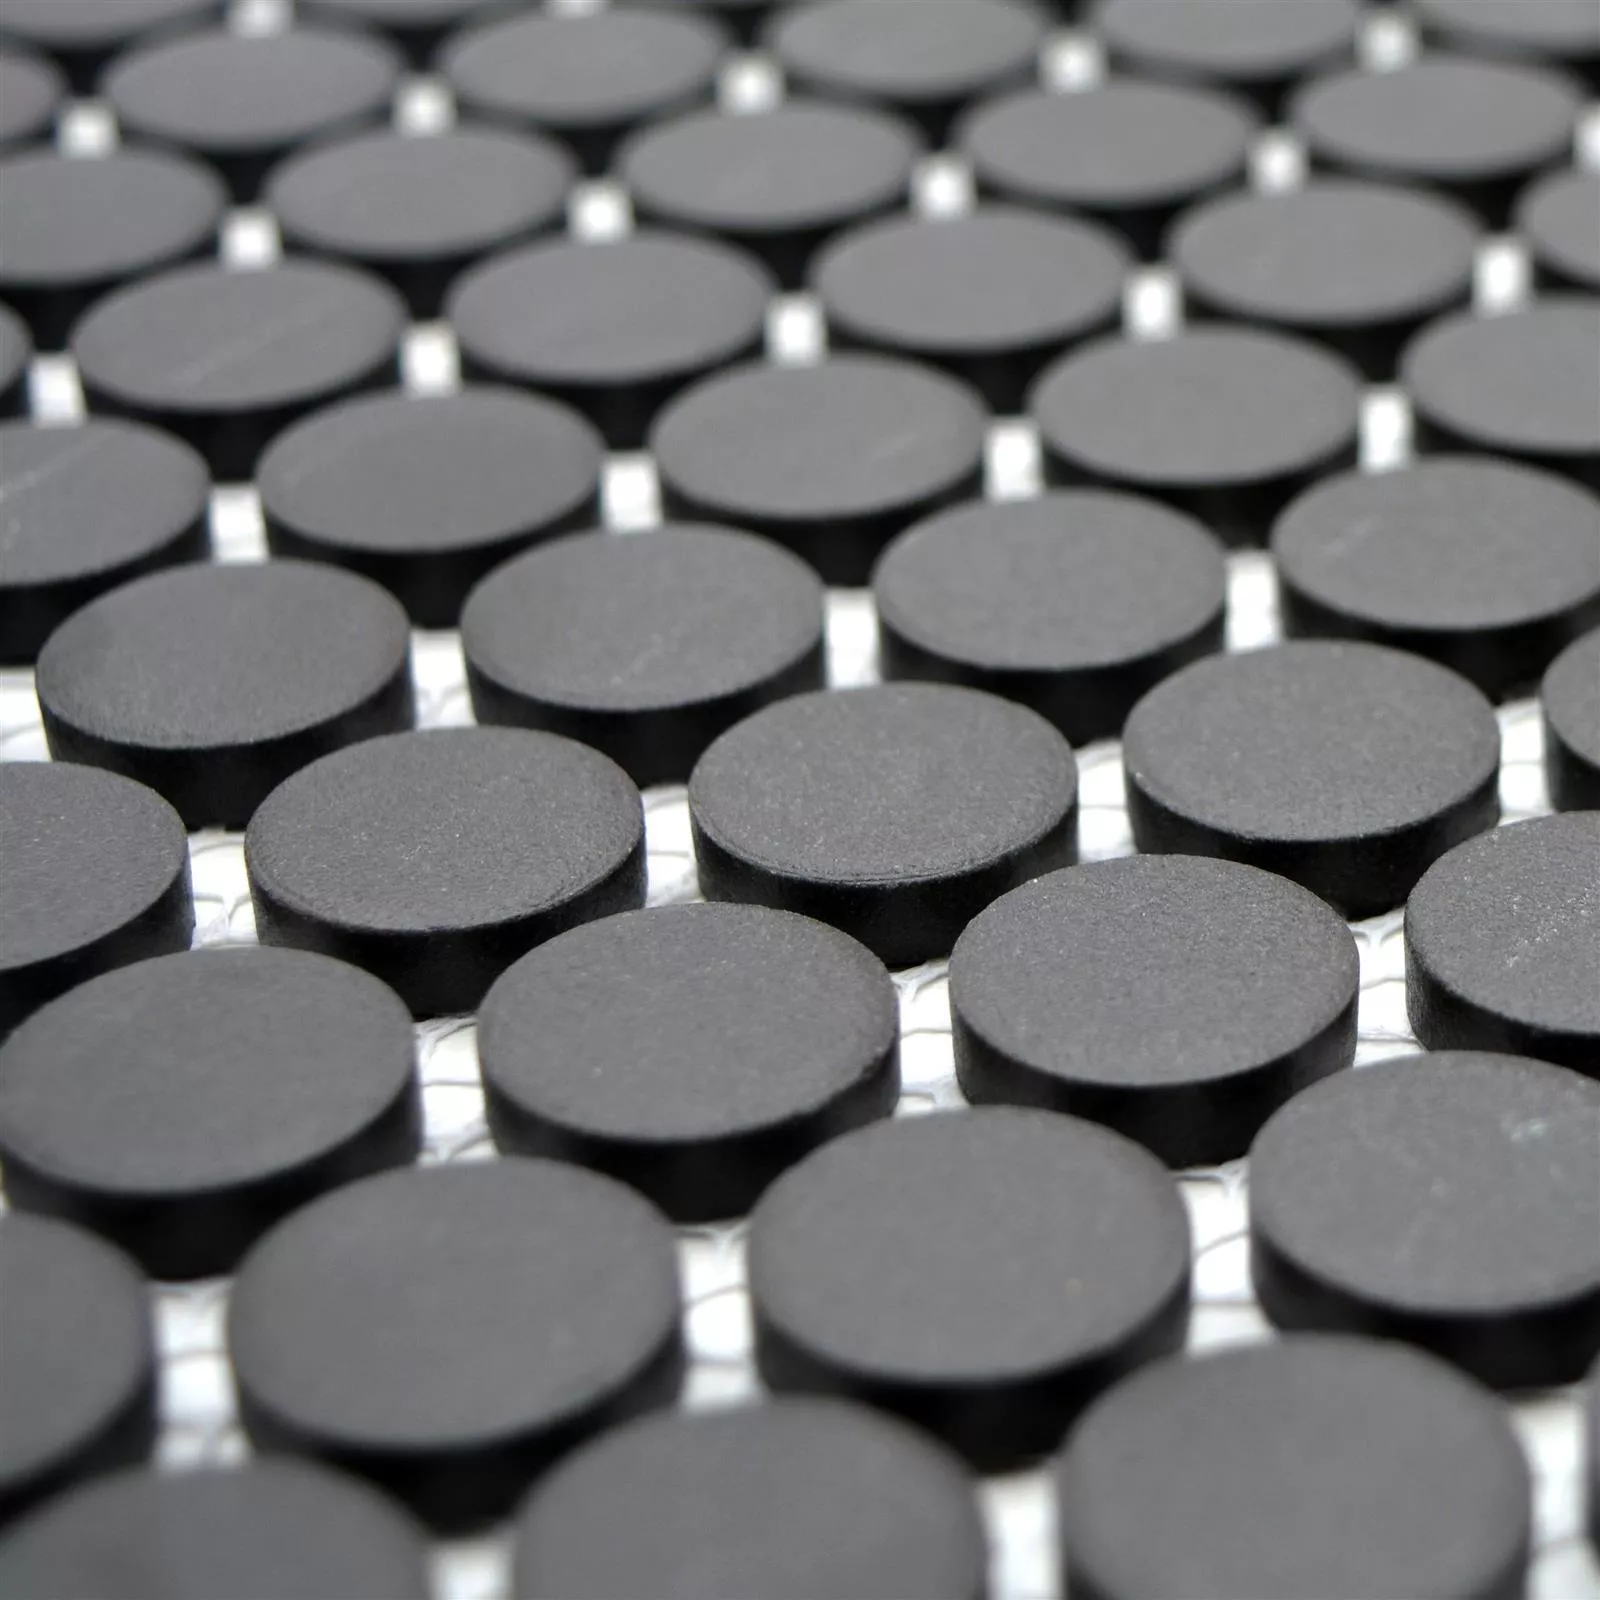 Sample Ceramic Mosaic Tiles Button Radoslov Unglazed Black